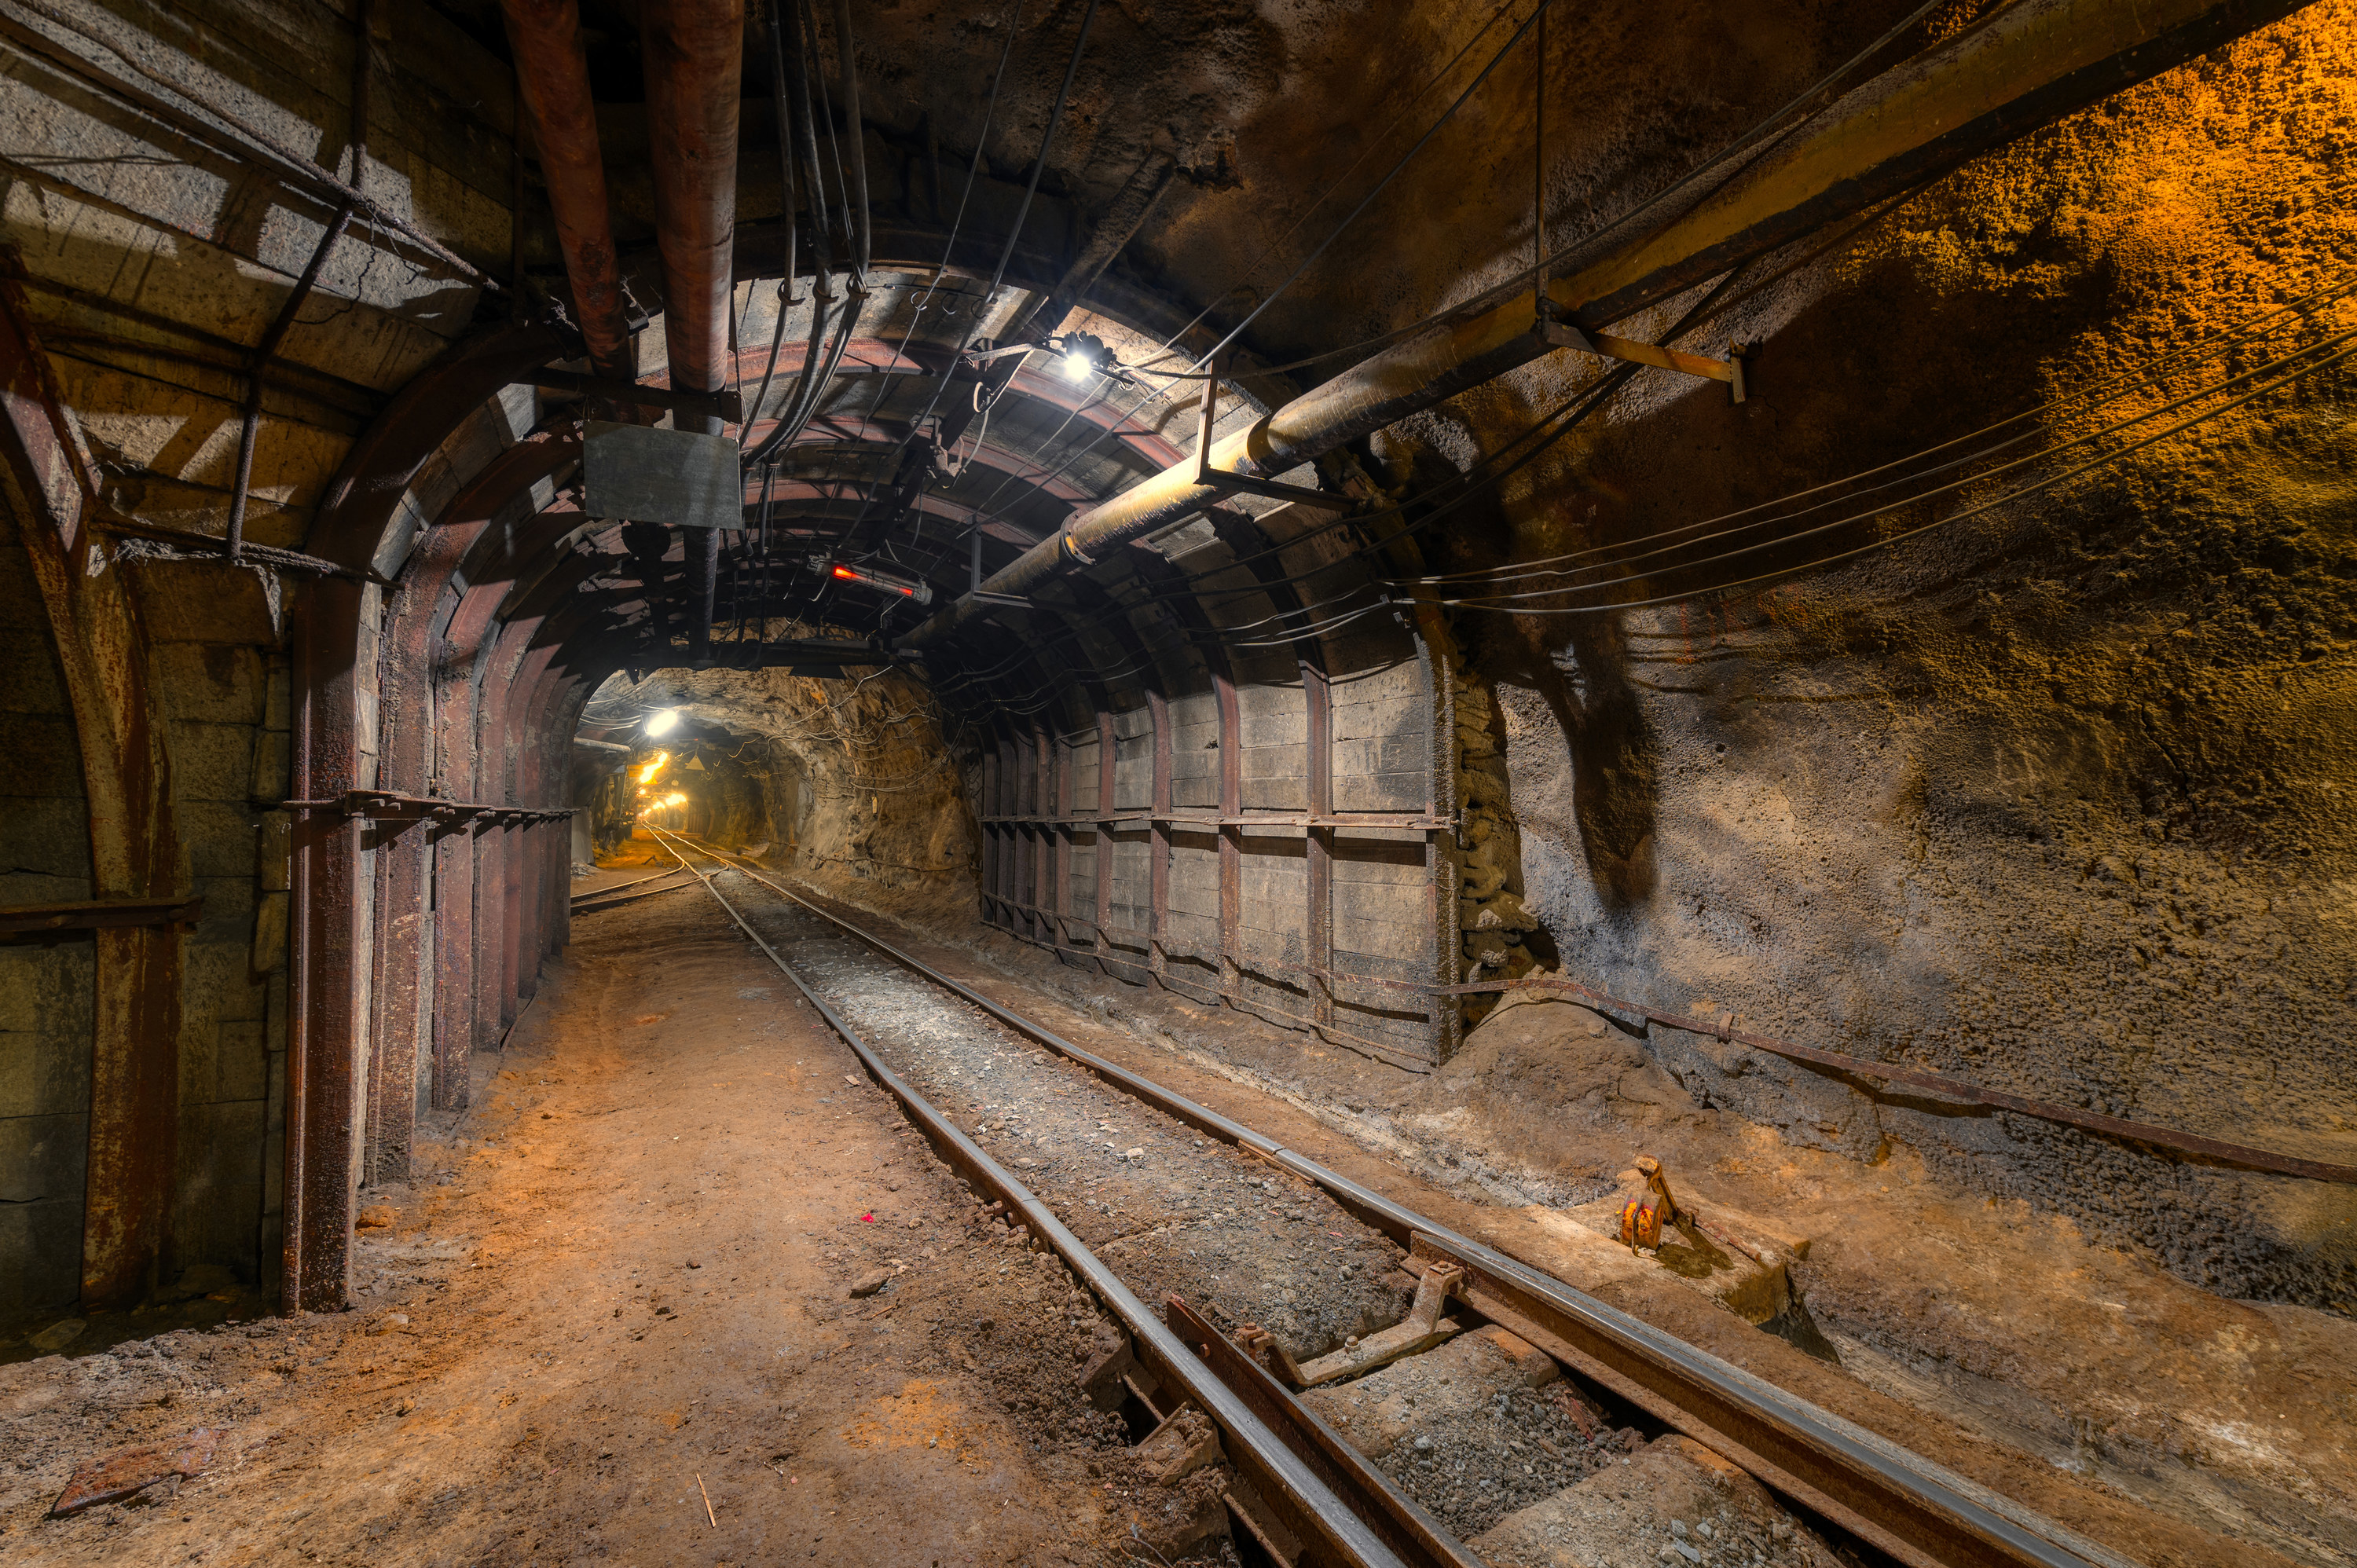 An underground tunnel showing railroad tracks